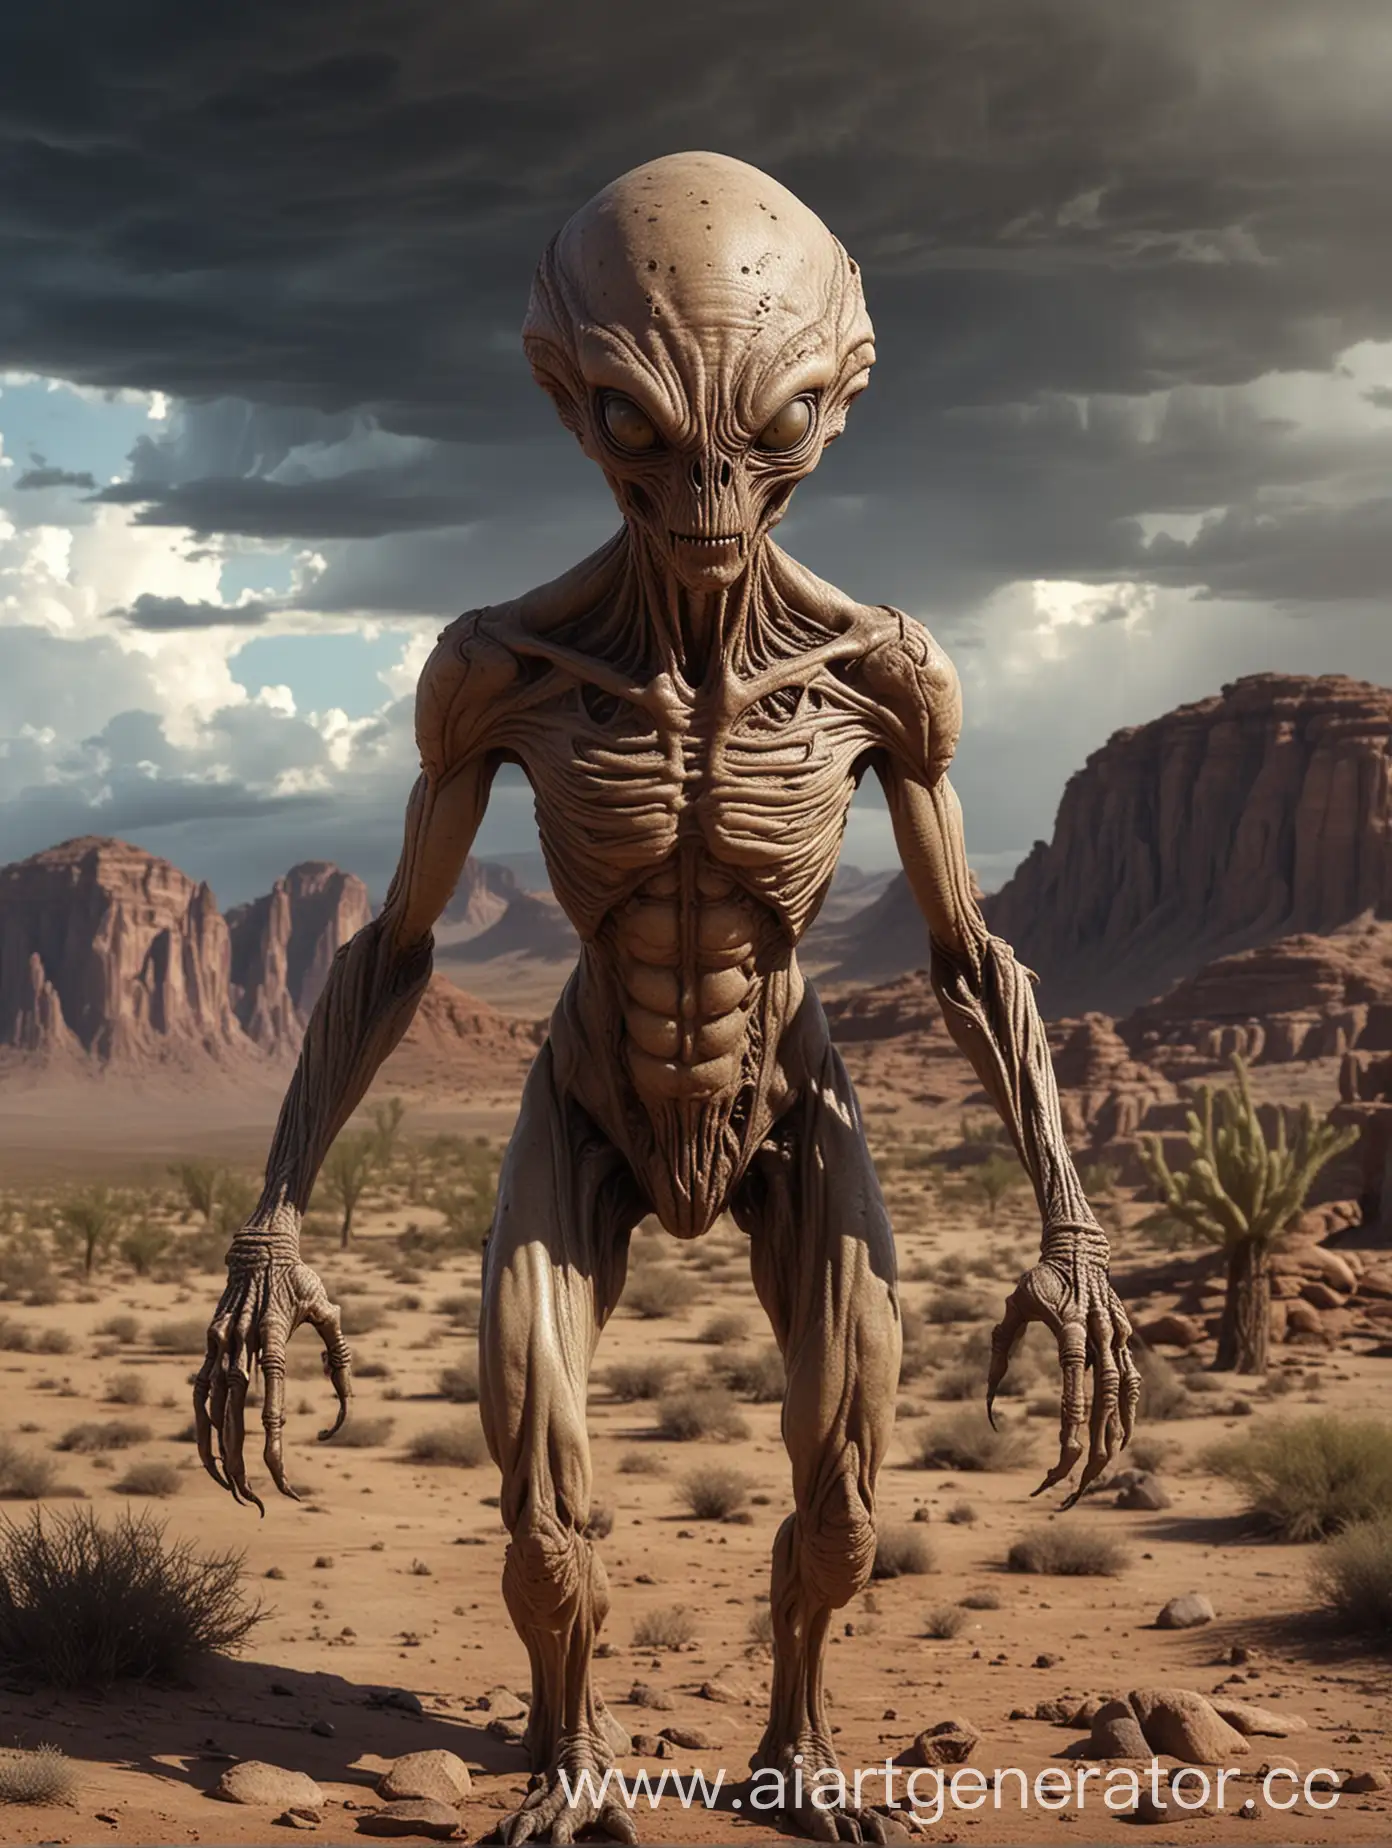 Unusual-Alien-Creature-in-Desert-Landscape-with-Storm